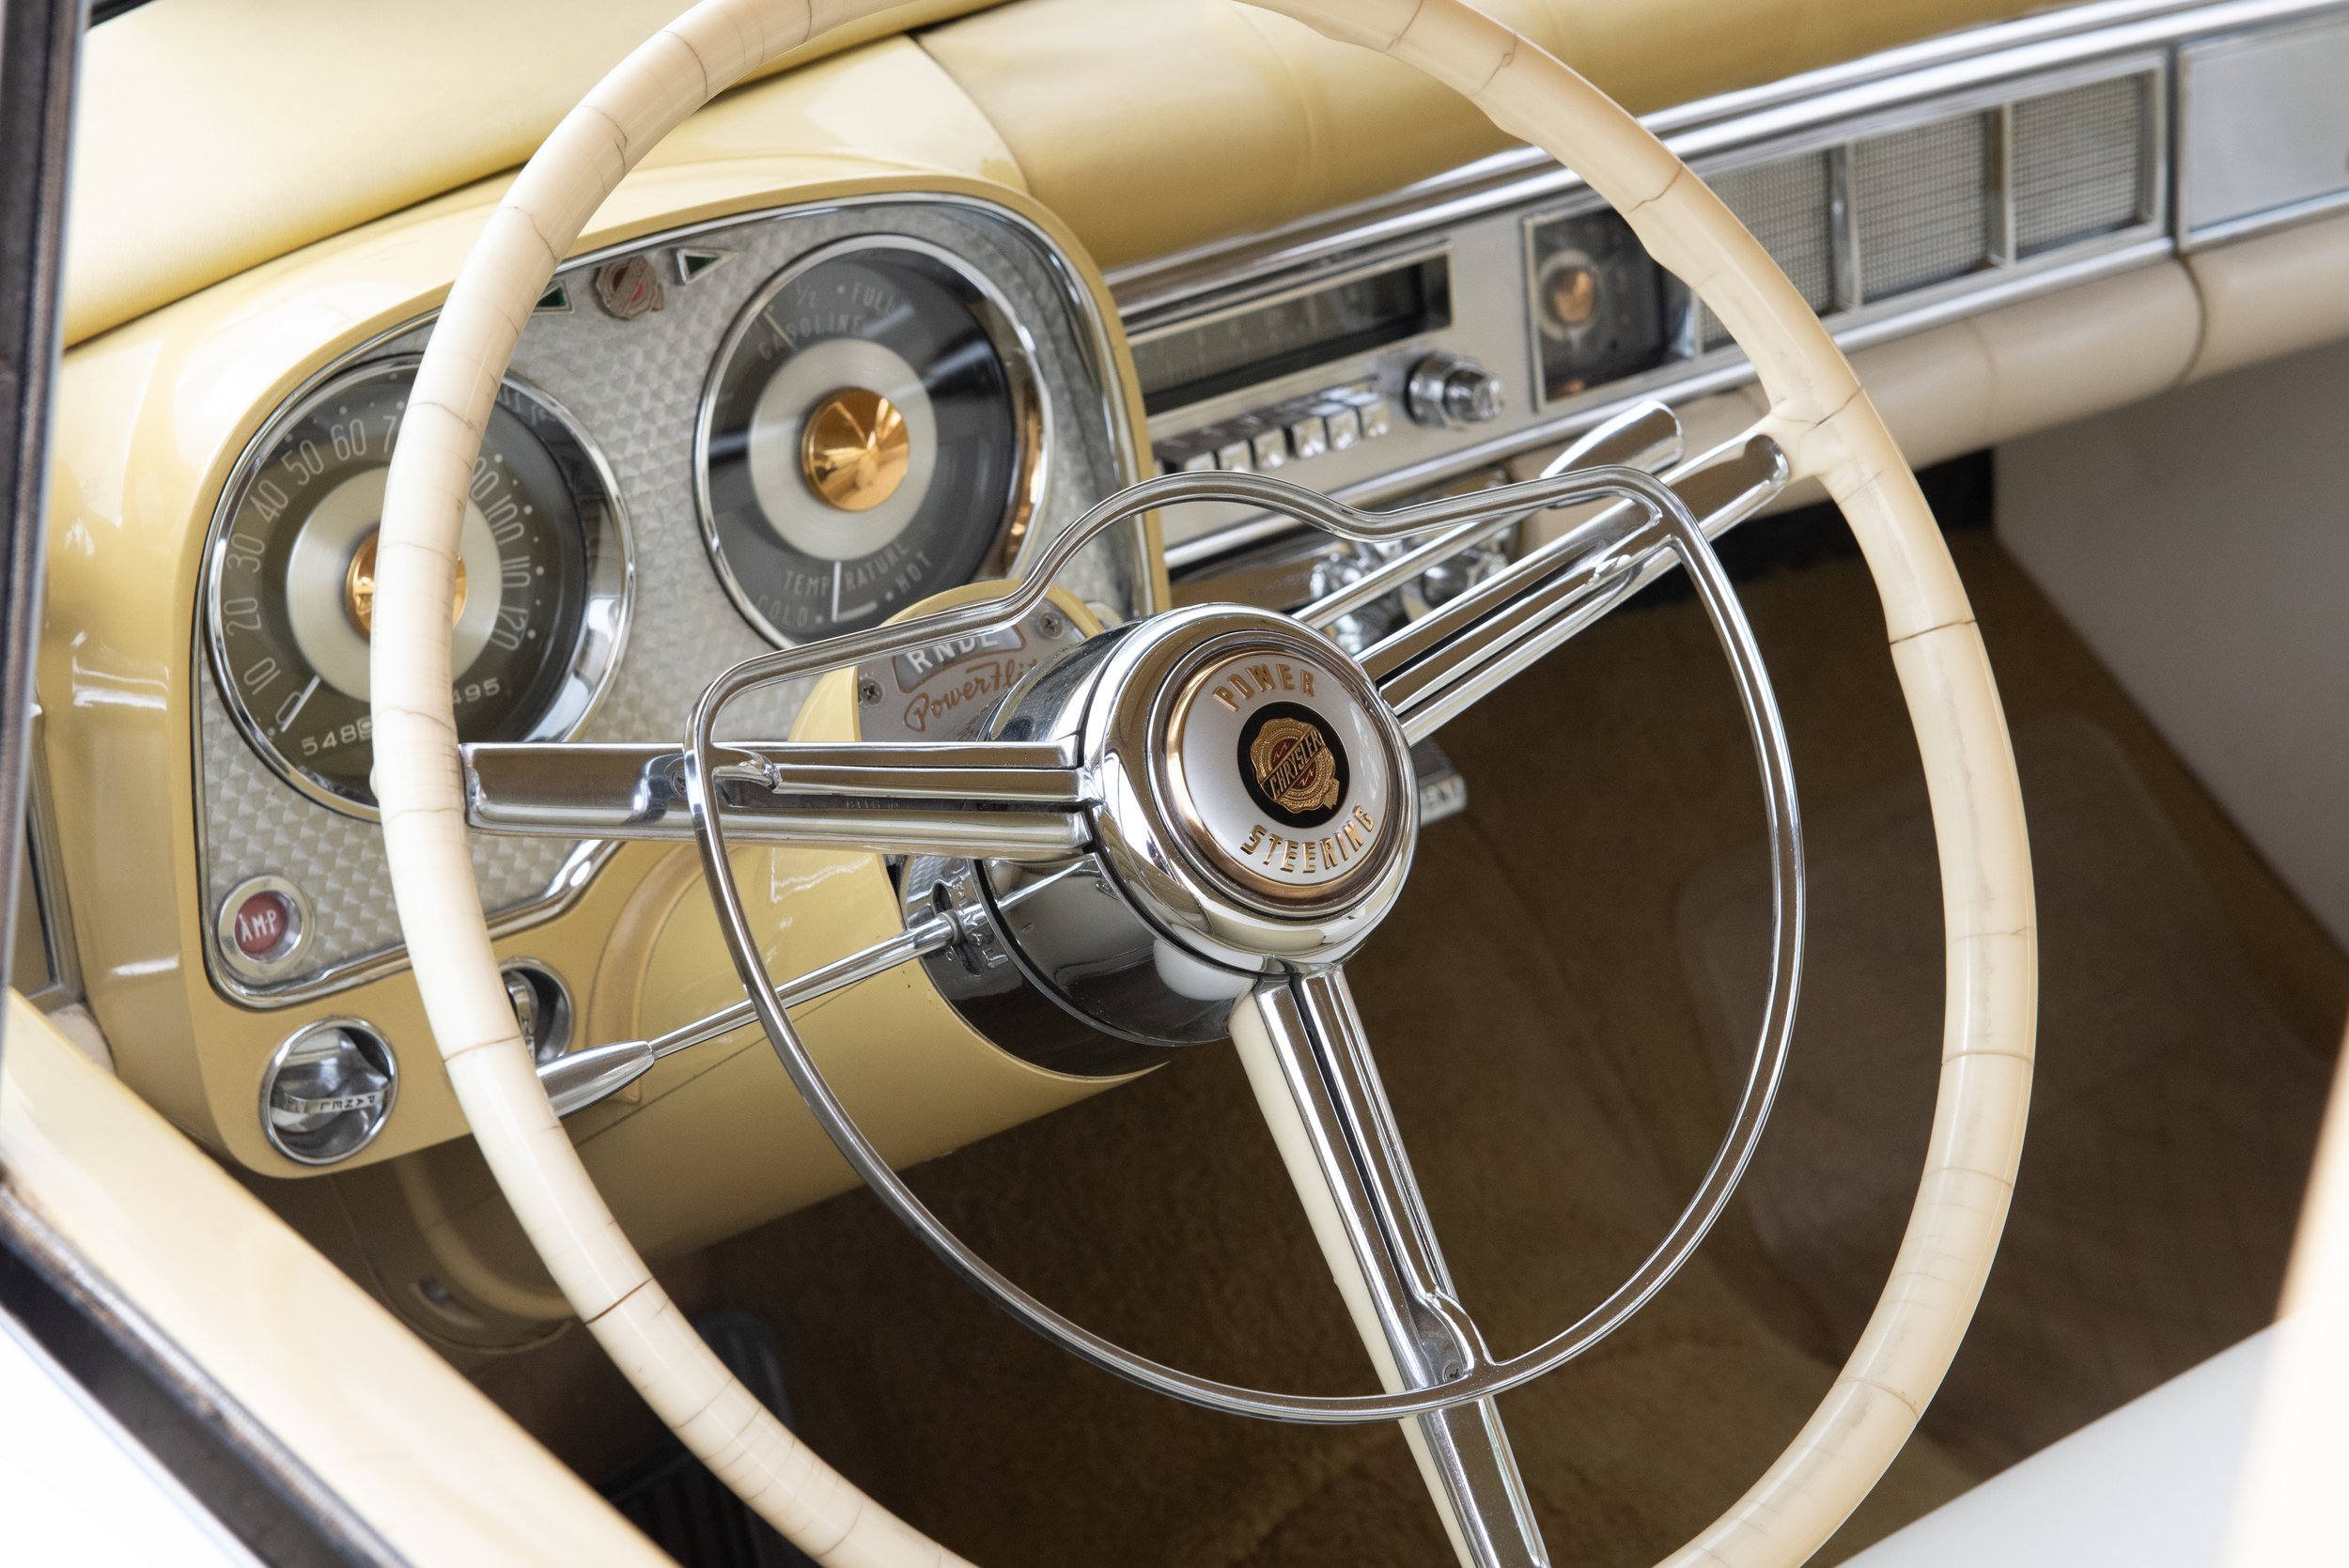  Photo: Adrian Michael  1954 Chrysler Windsor interior. 